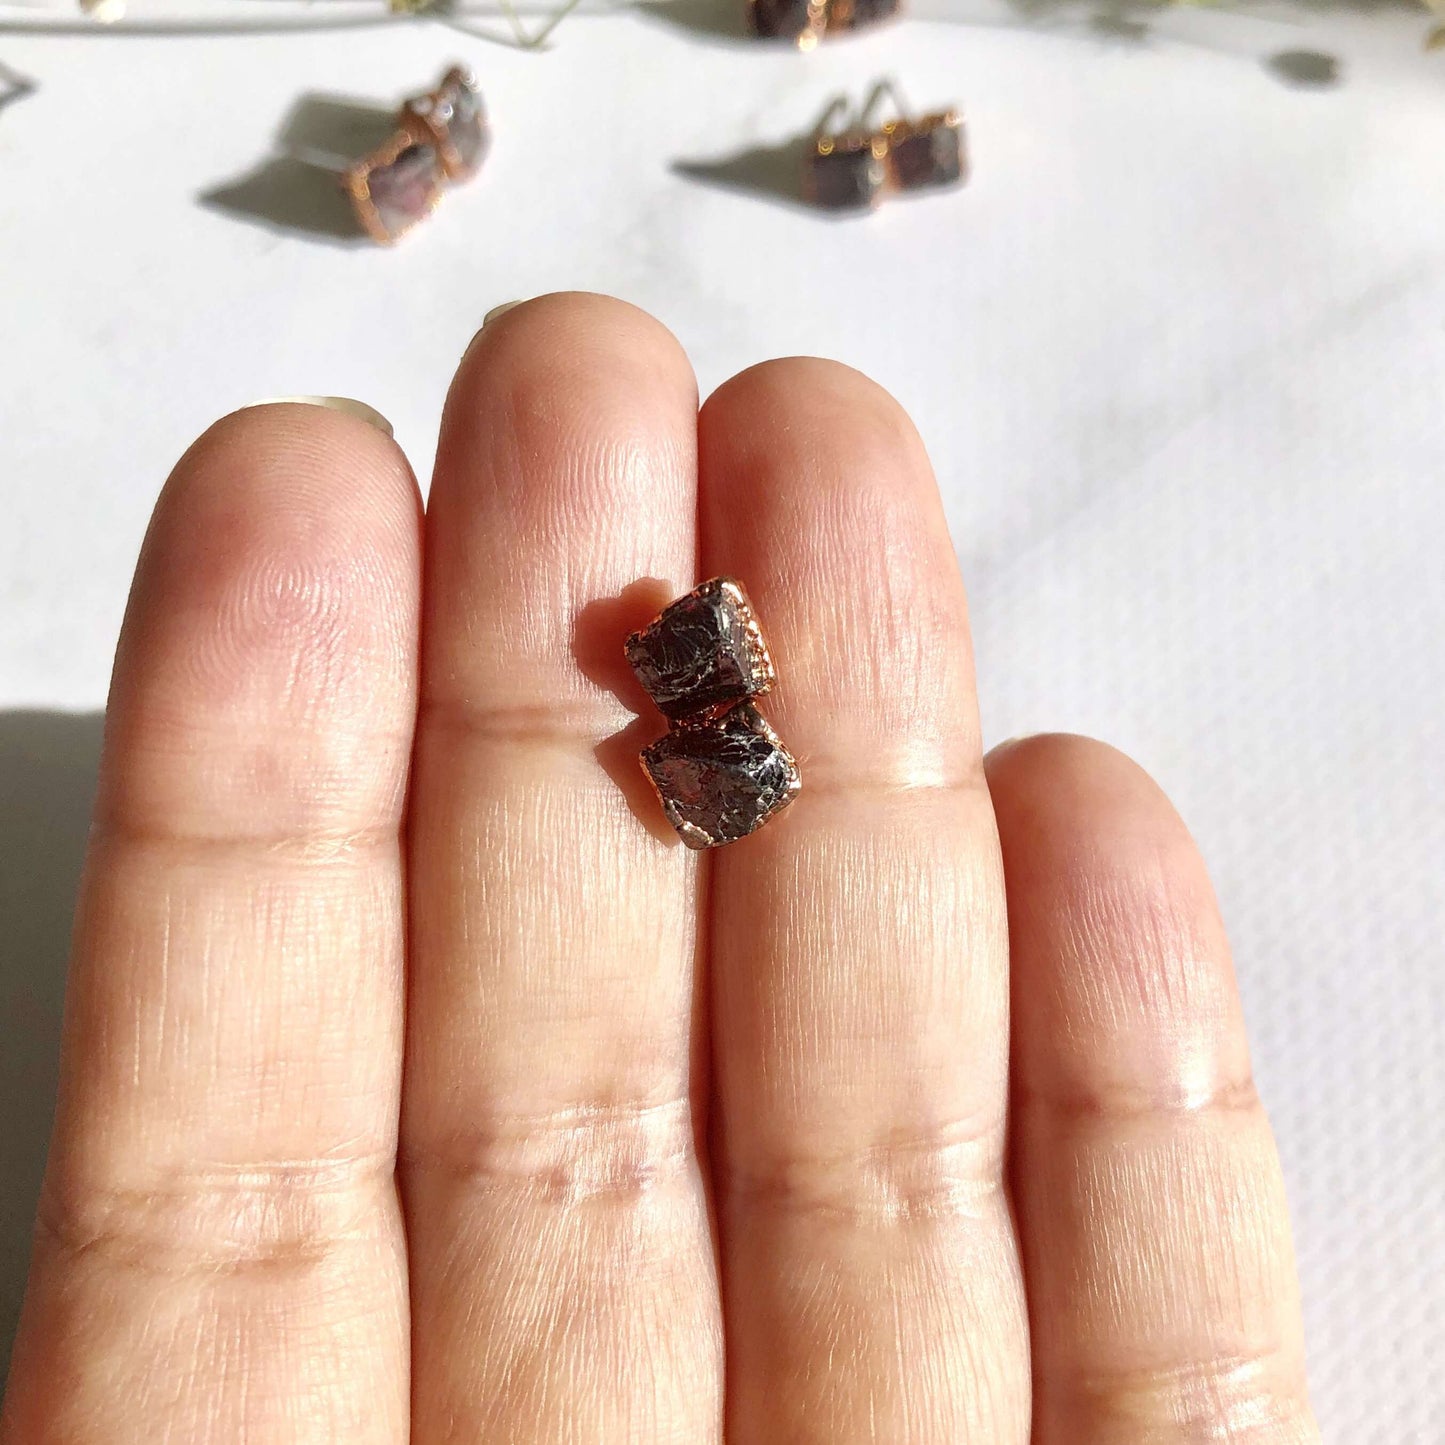 Garnet crystall earrings in hand